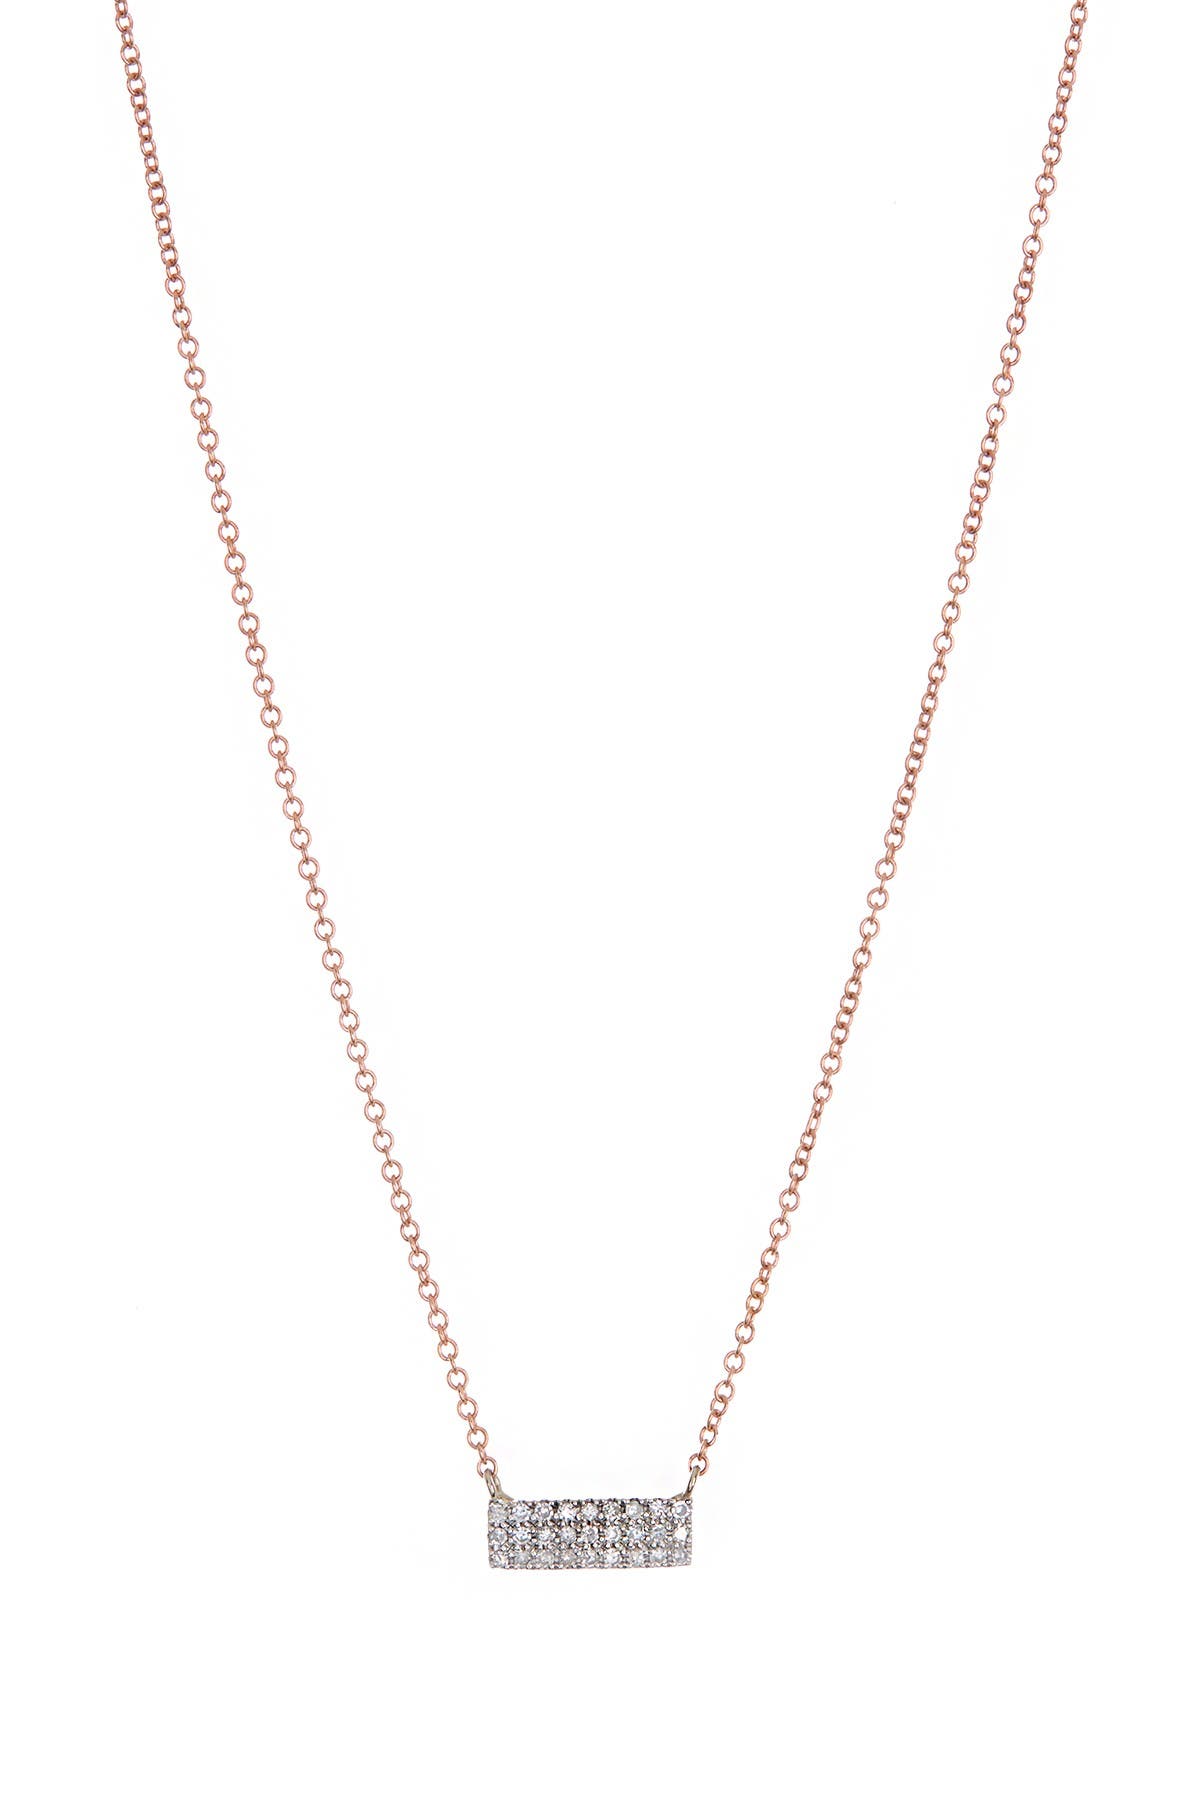 Meira T 14k Rose Gold Pave Diamond Bar Pendant Necklace